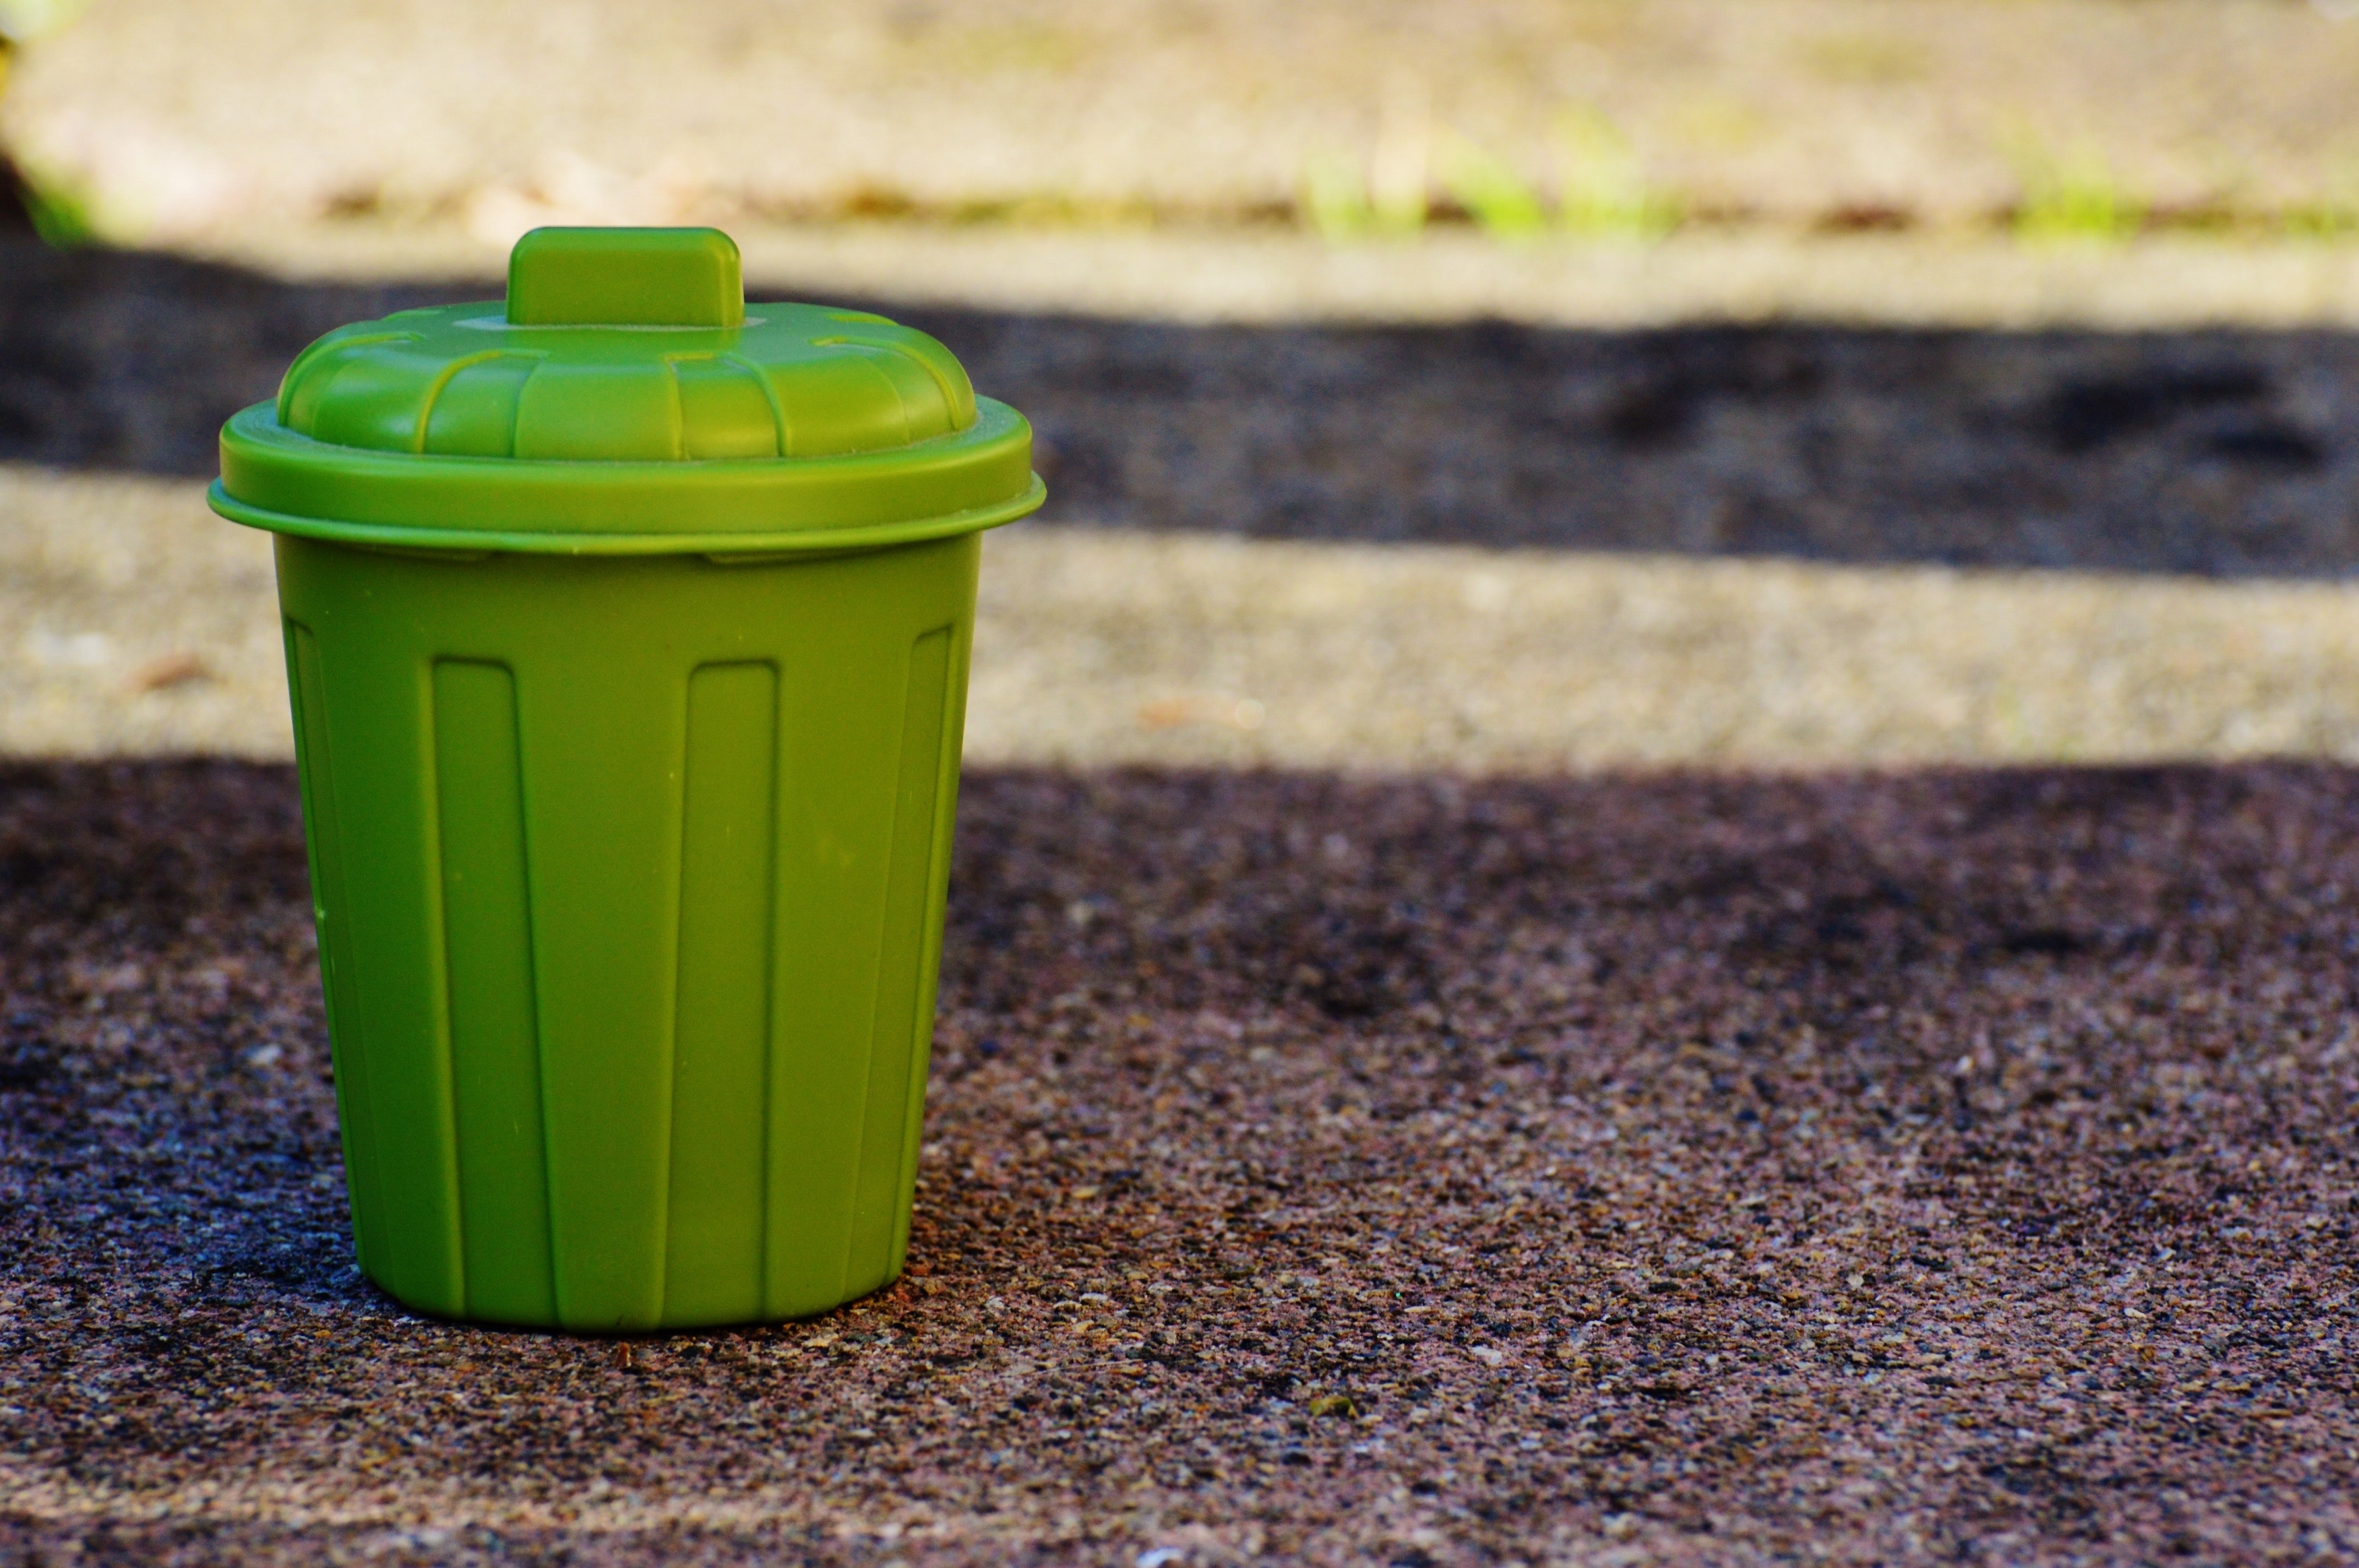 green plastic trash bin on brown soil